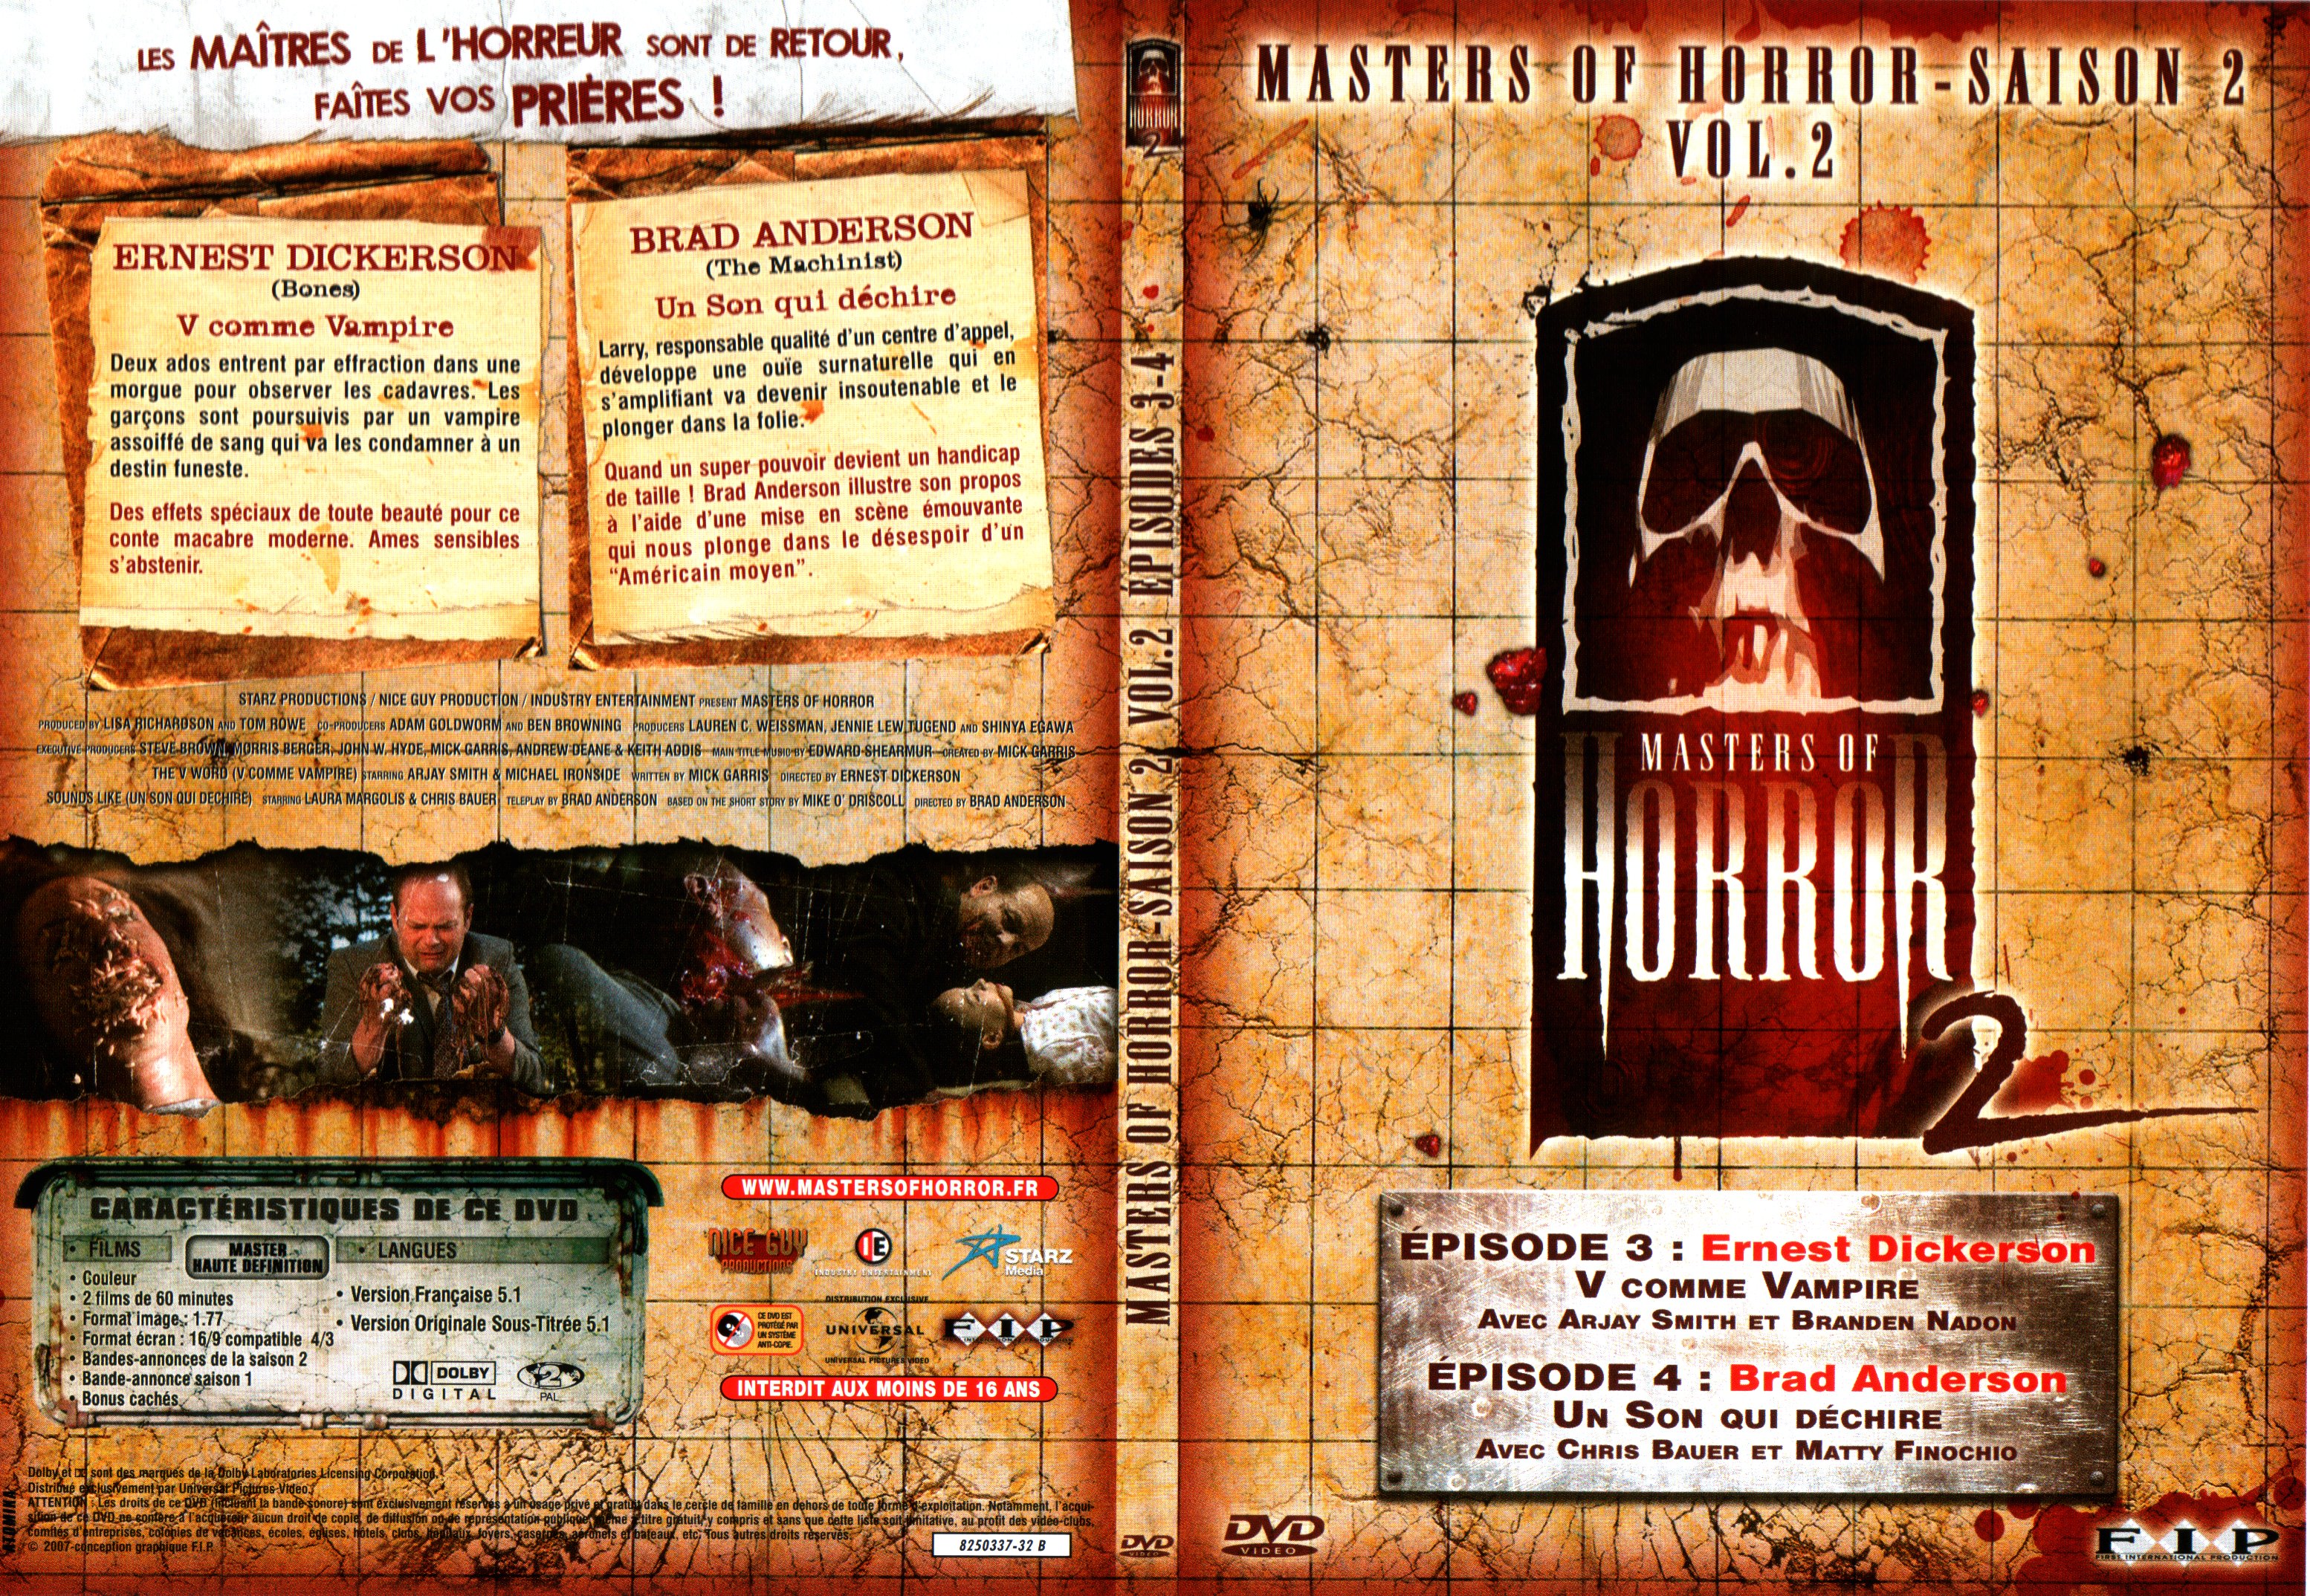 Jaquette DVD Masters of horror Saison 2 vol 2